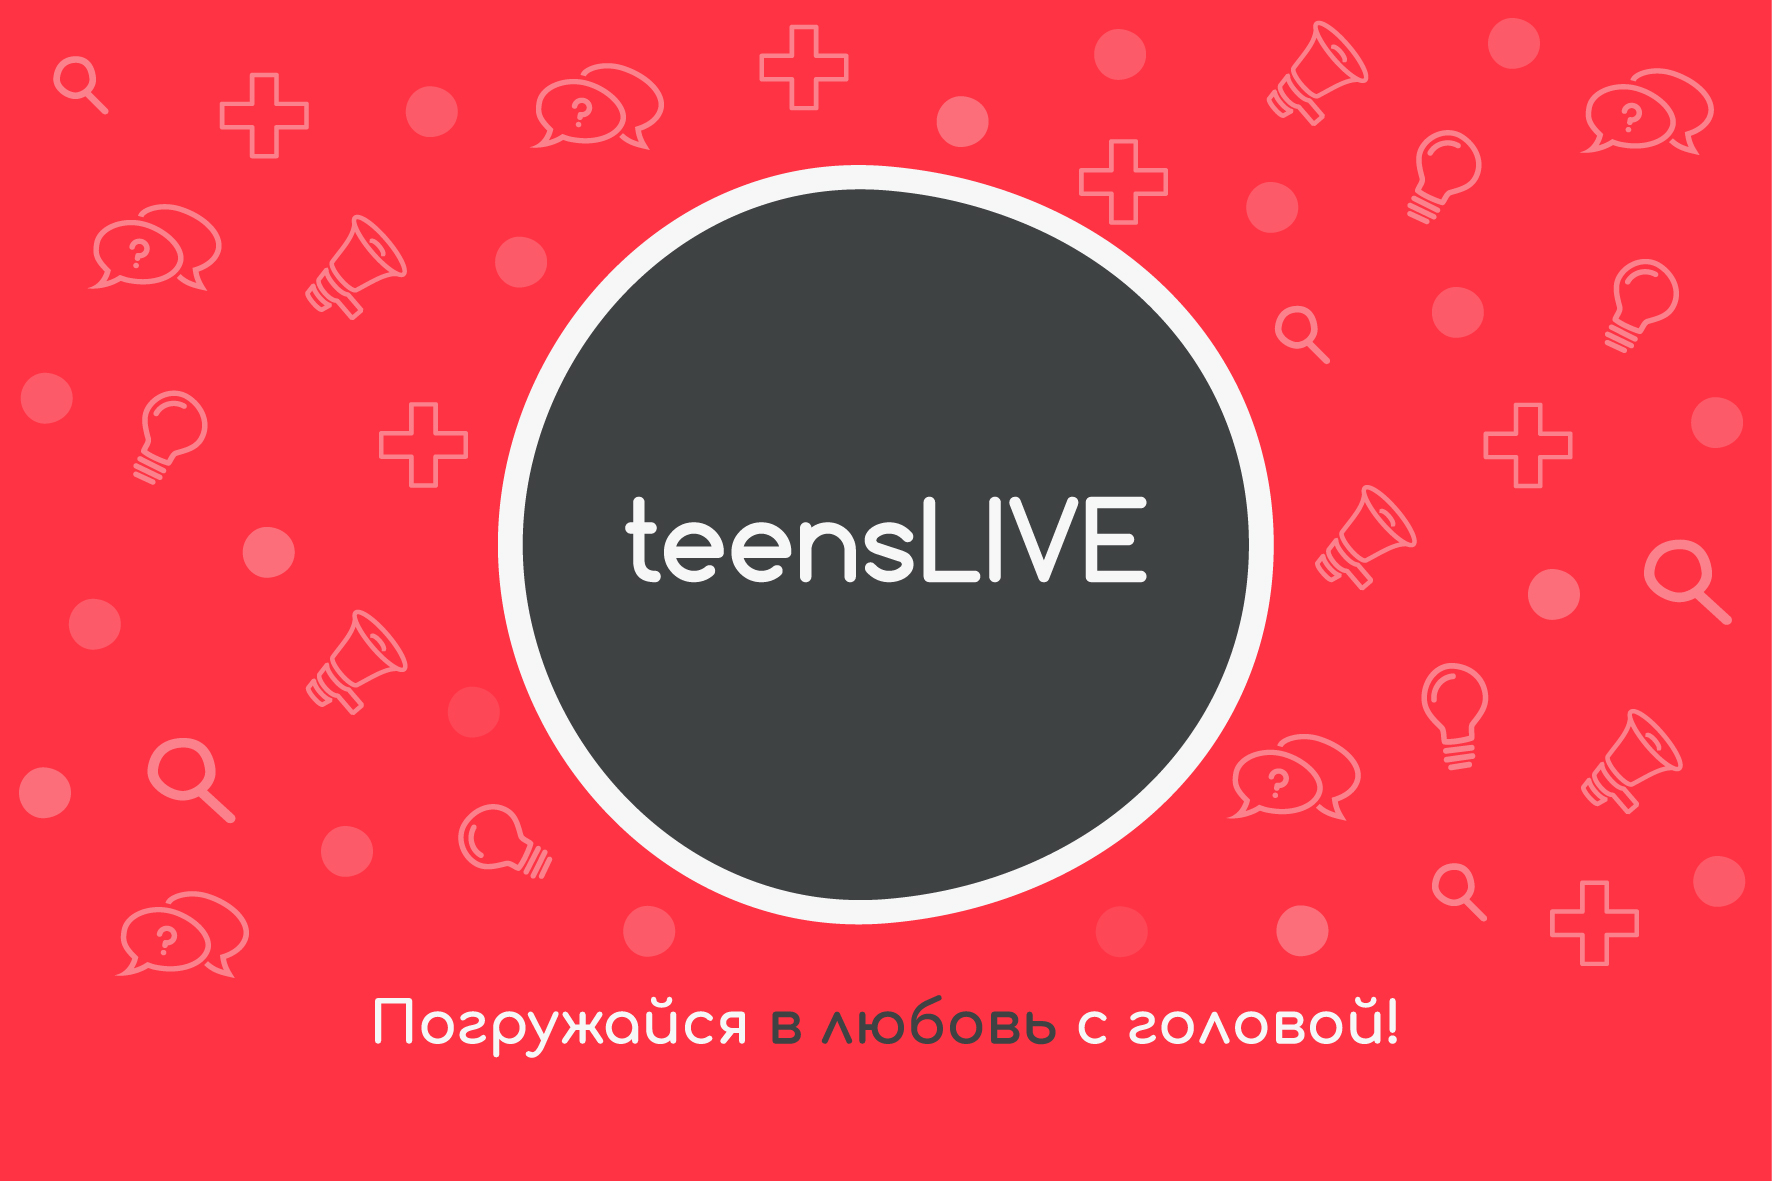 Teens live